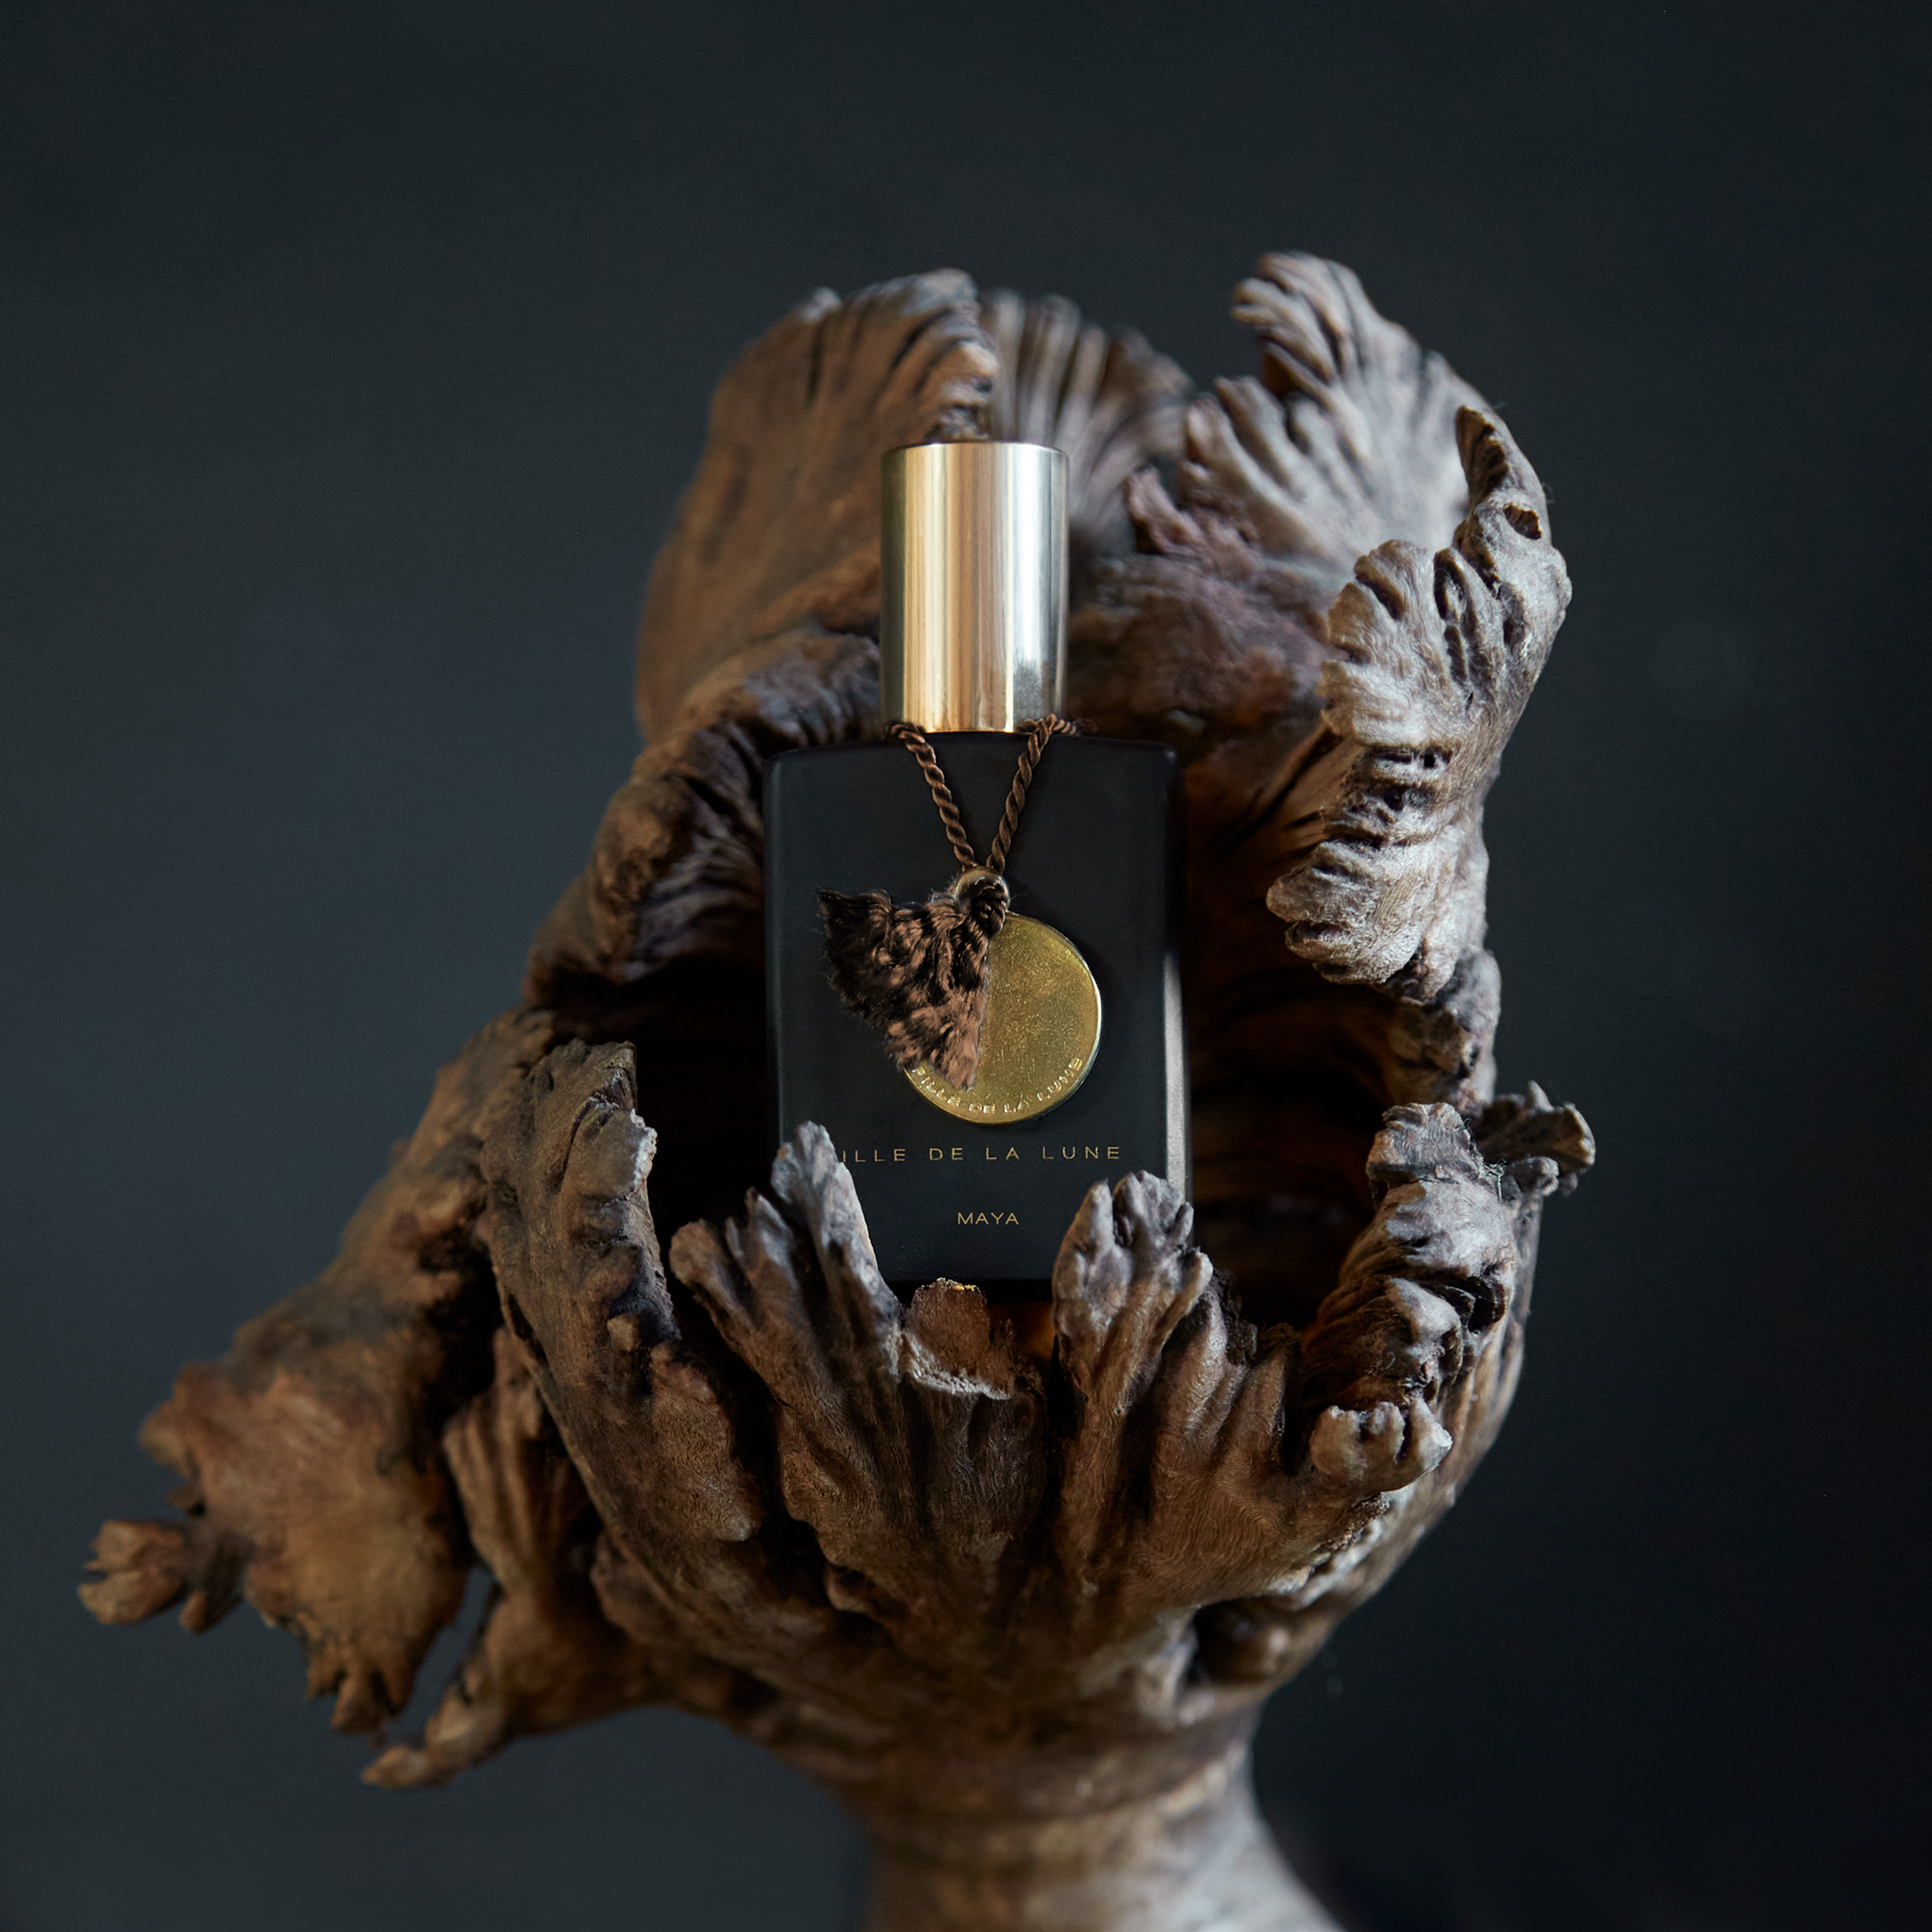  ScentKulture Perfume Roll On Oil, Gold Rush, Inspired by California  Dream, Vegan & Cruelty Free